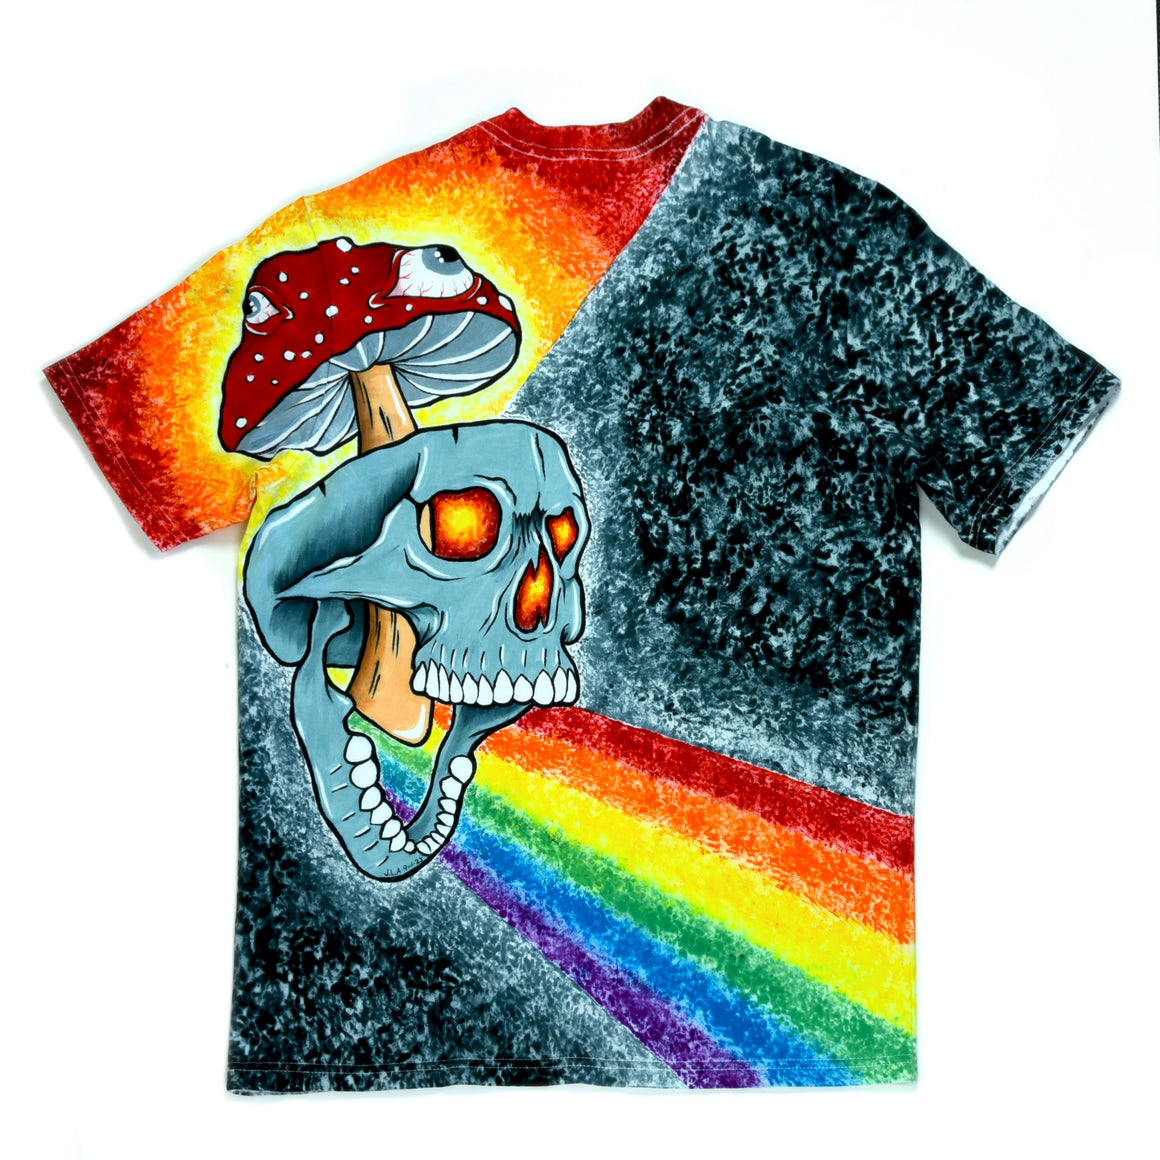 XL - Hand-painted and Dyed T-Shirt - Rainbow Mushroom Head